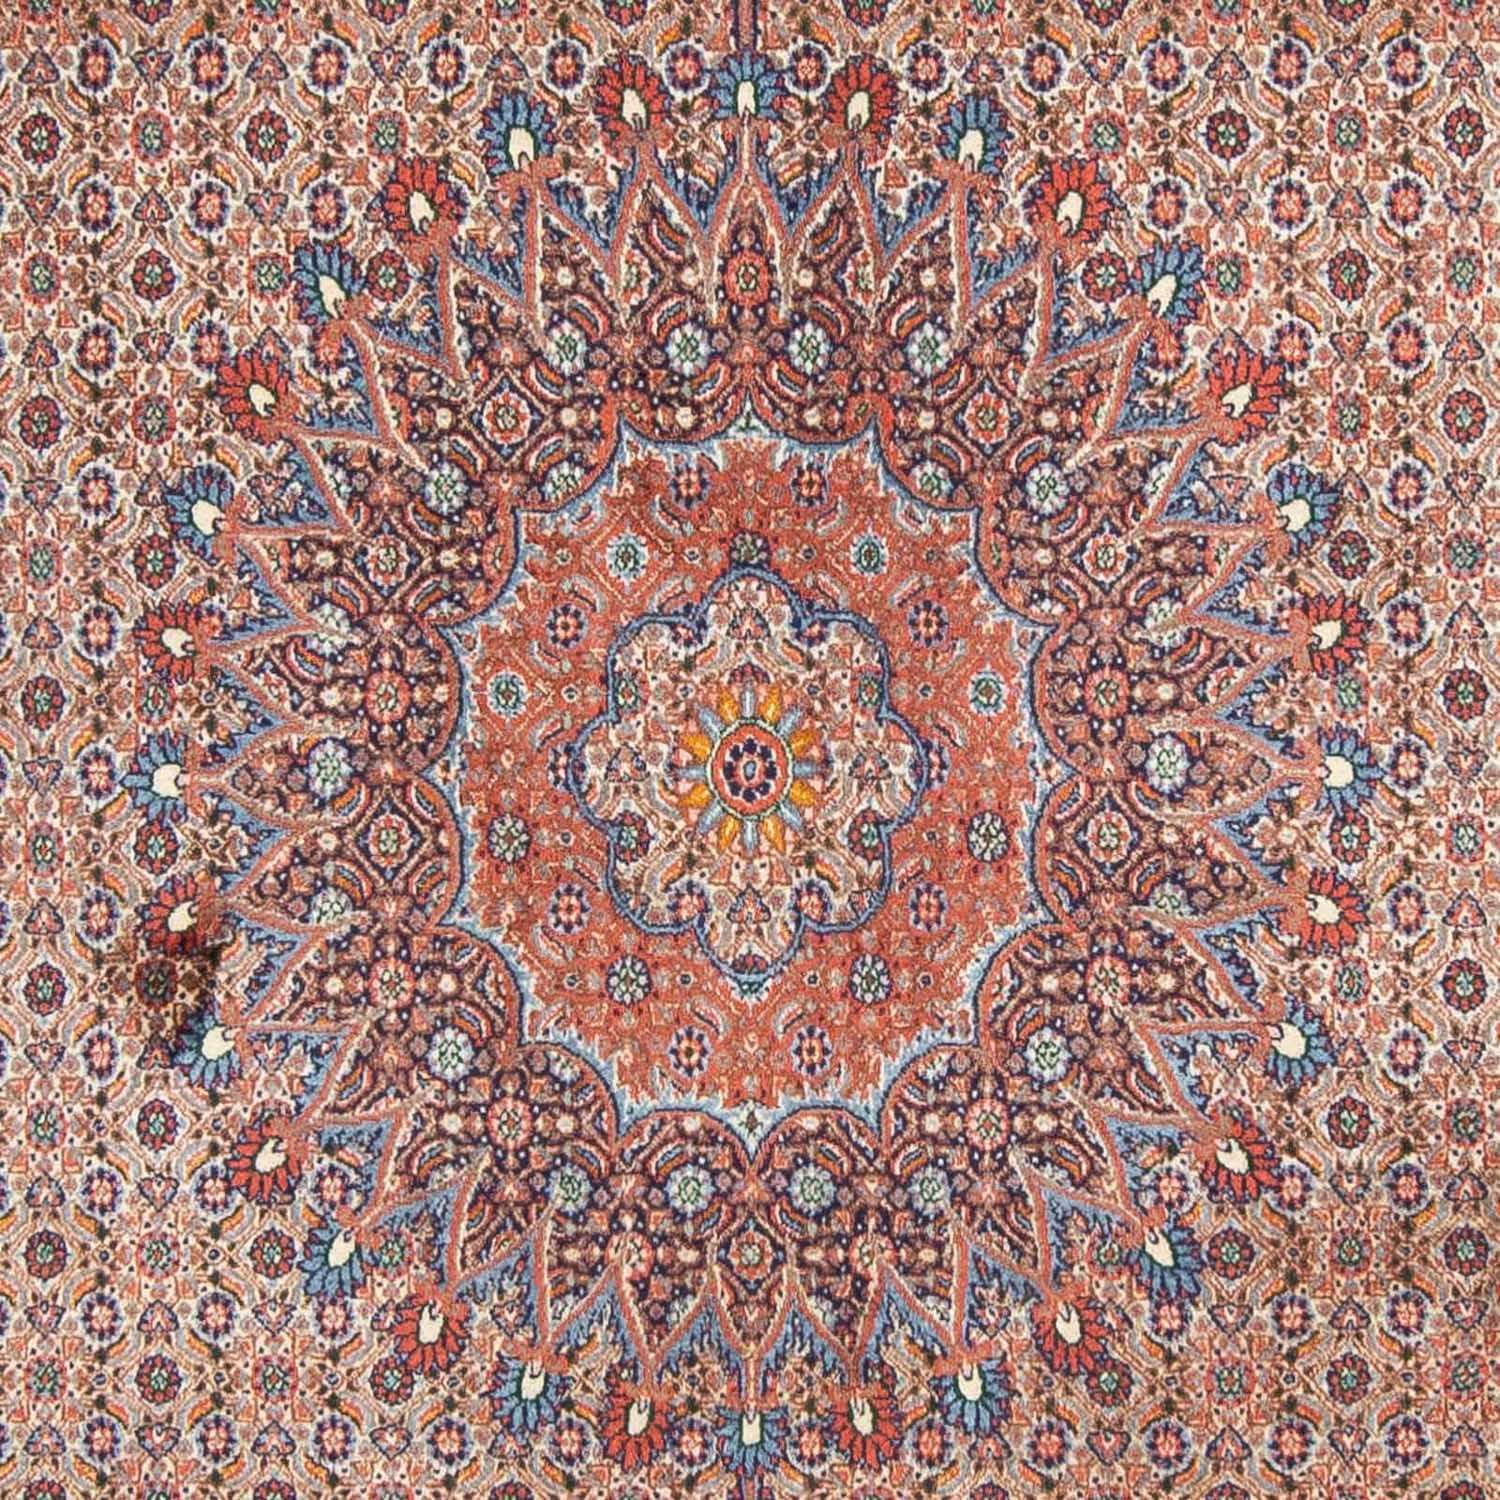 Tapis persan - Classique - 293 x 198 cm - rouge clair